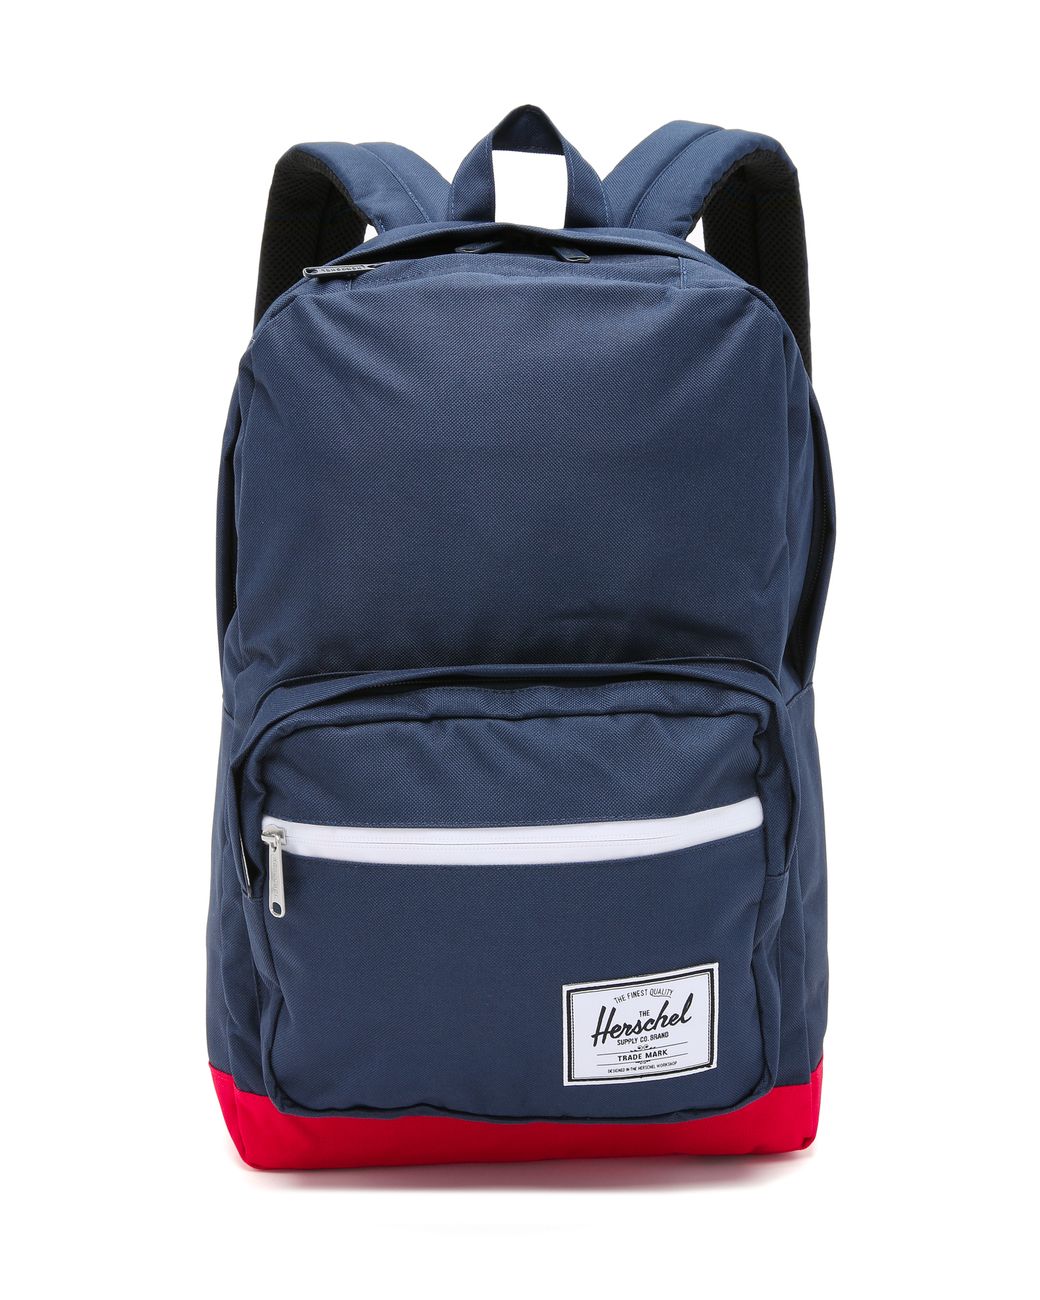 Herschel Supply Co. Pop Quiz Backpack - Navy/red in Blue | Lyst